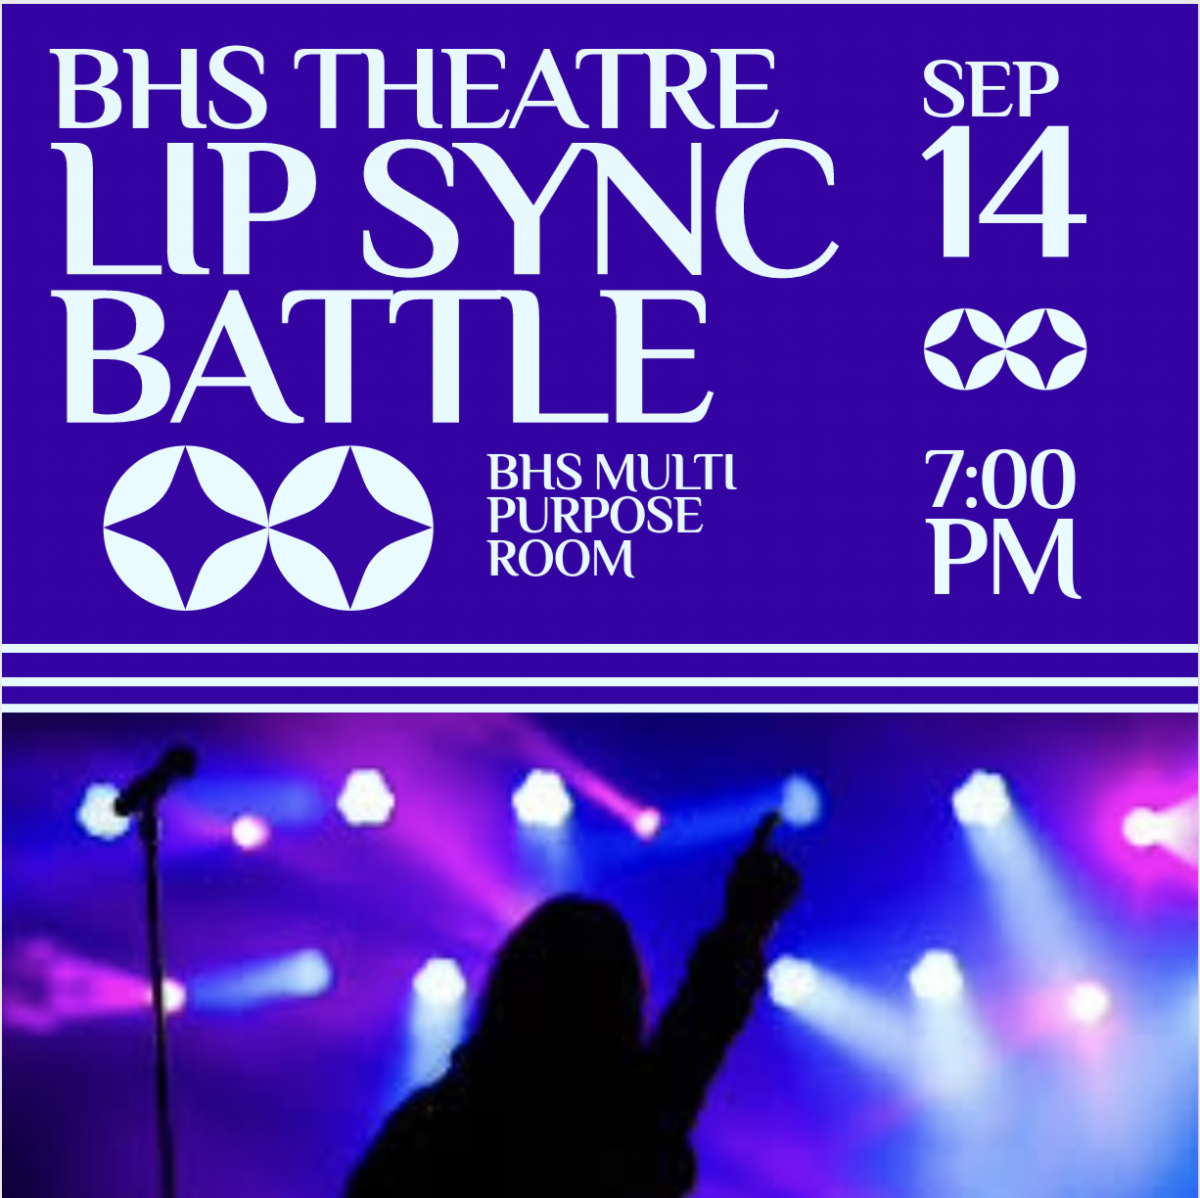 The Brandon High School Lip Sync Battle